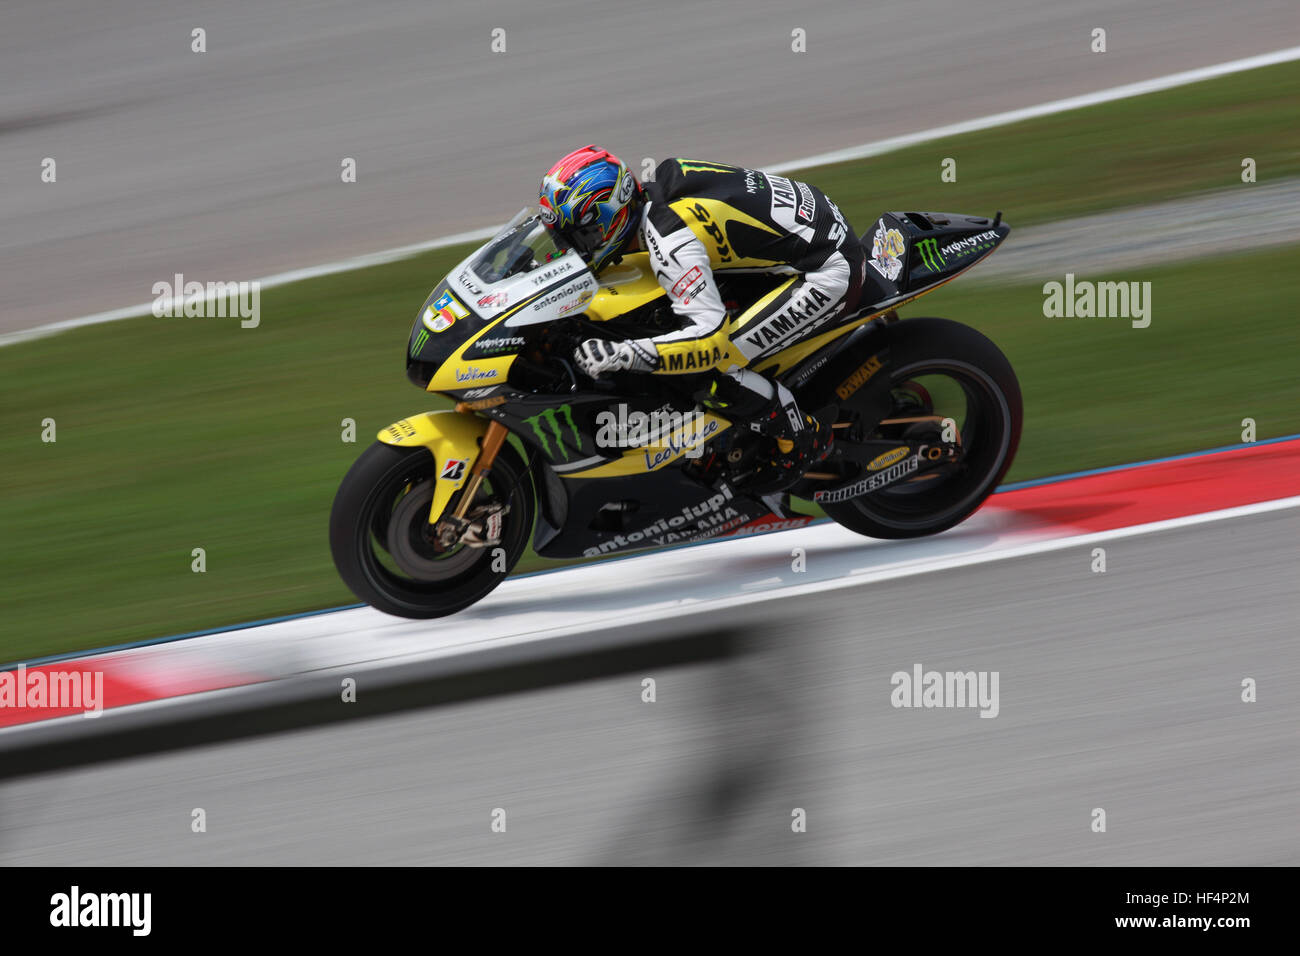 Moto GP rider during the race in Sepang International Circuits Stock Photo  - Alamy